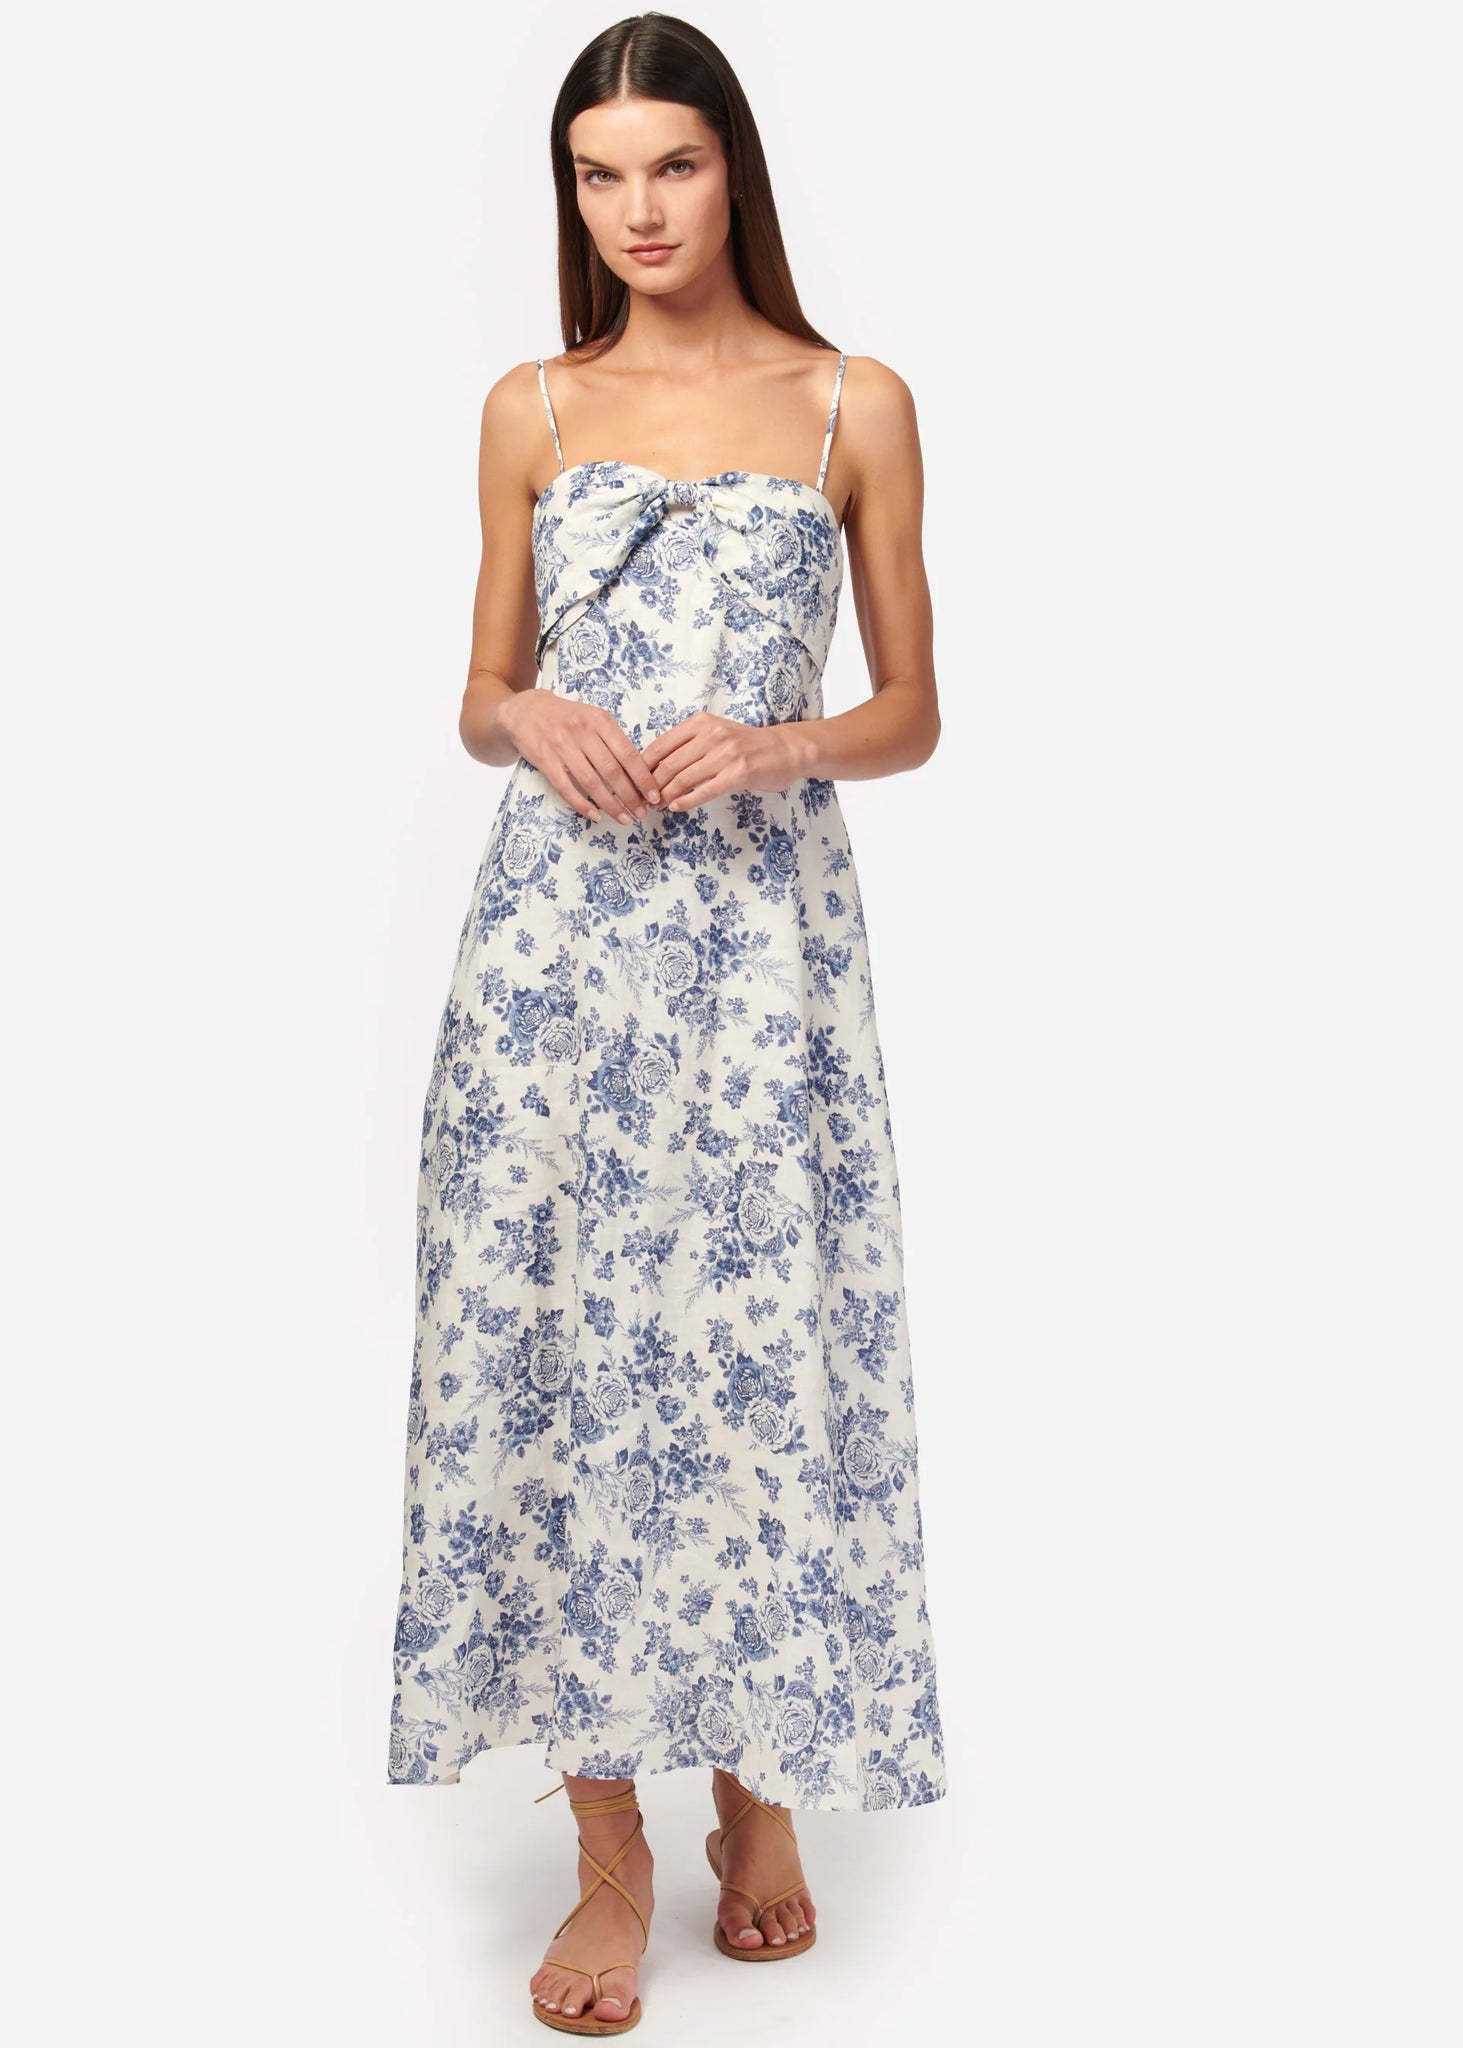 Cami NYC Tilney Dress - Stonewash Floral